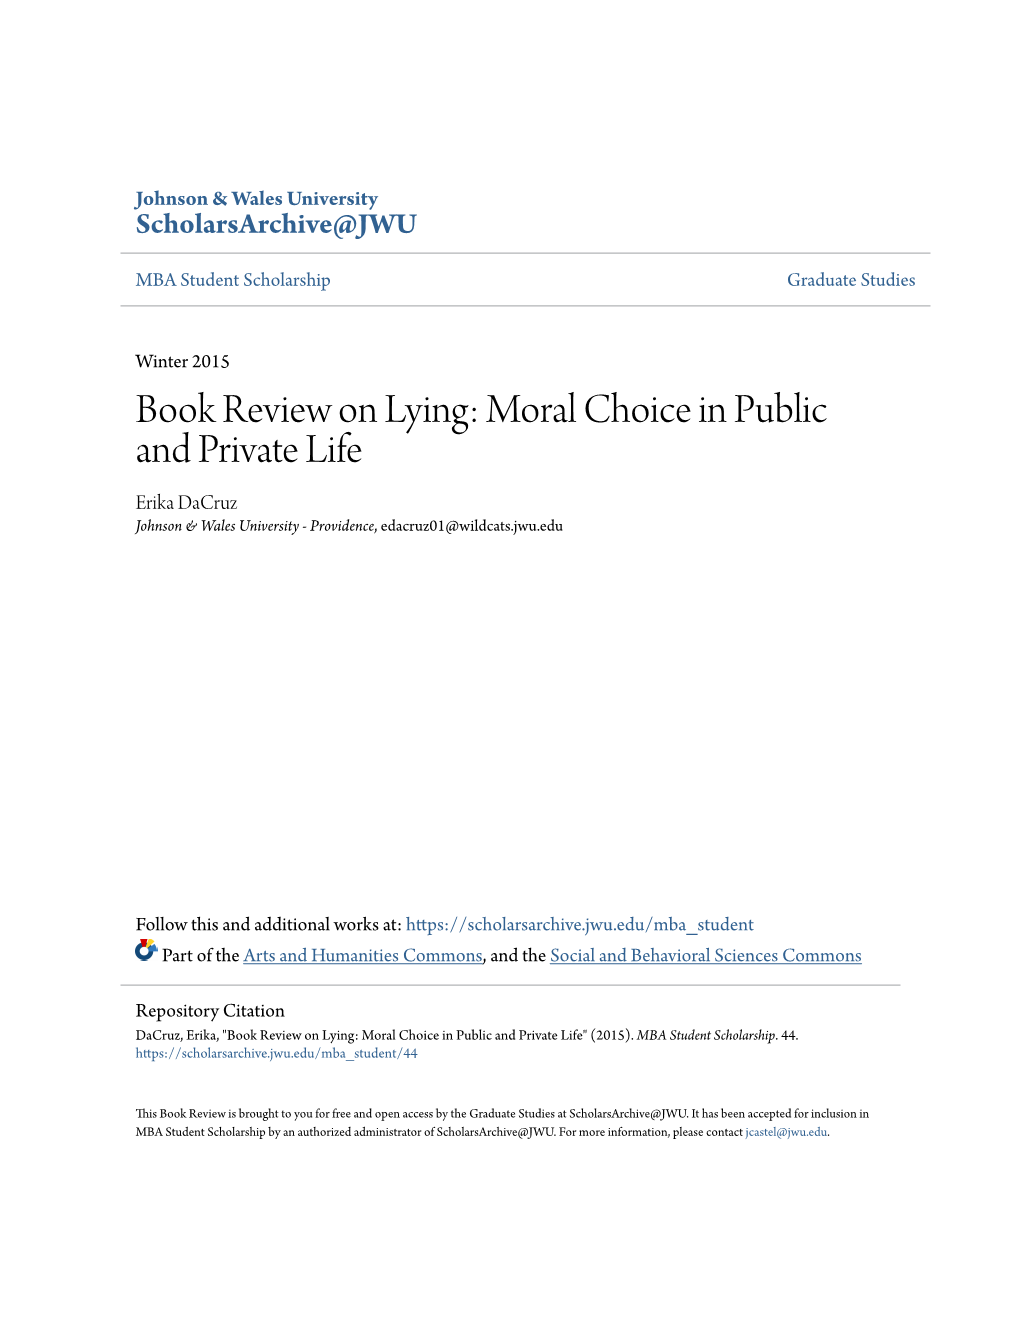 Book Review on Lying: Moral Choice in Public and Private Life Erika Dacruz Johnson & Wales University - Providence, Edacruz01@Wildcats.Jwu.Edu